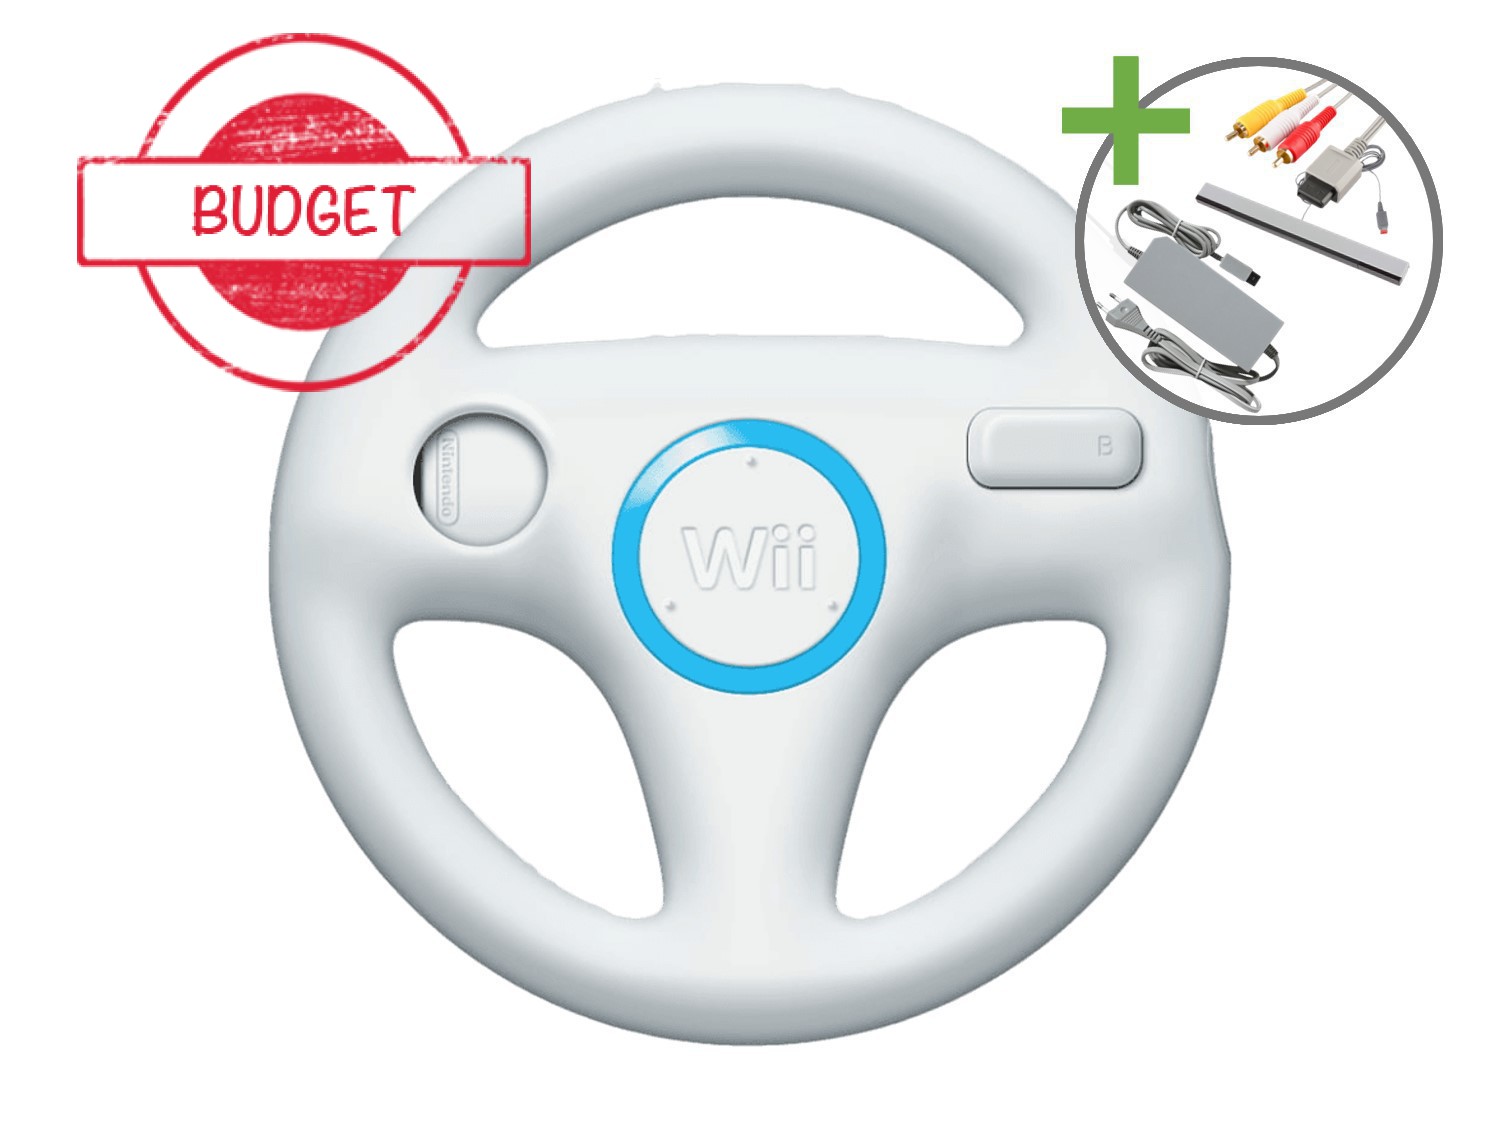 Nintendo Wii Starter Pack - Mario Kart Motion Plus White Edition - Budget - Wii Hardware - 4